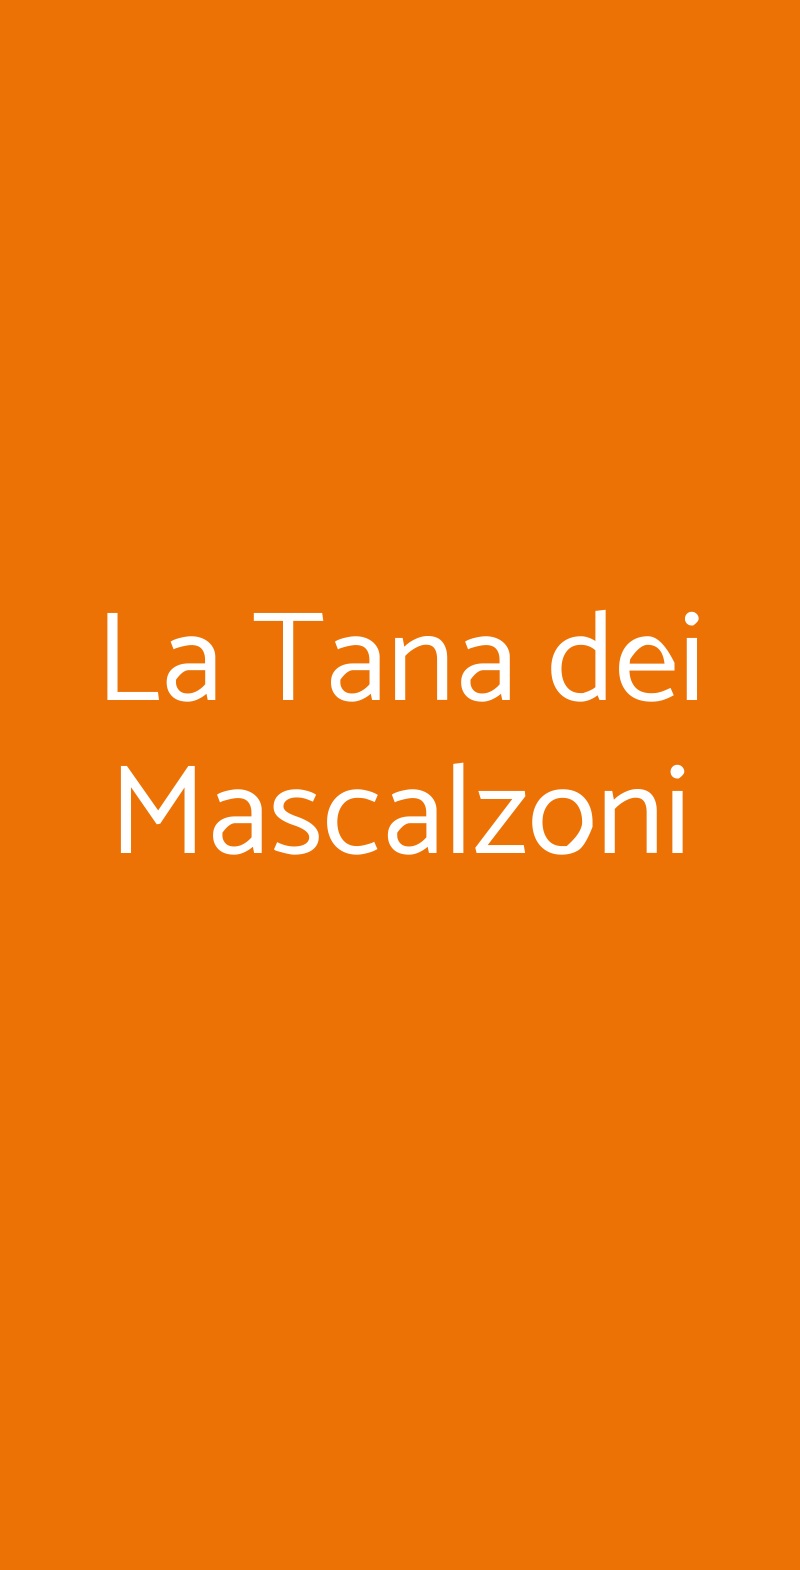 La Tana dei Mascalzoni Napoli menù 1 pagina